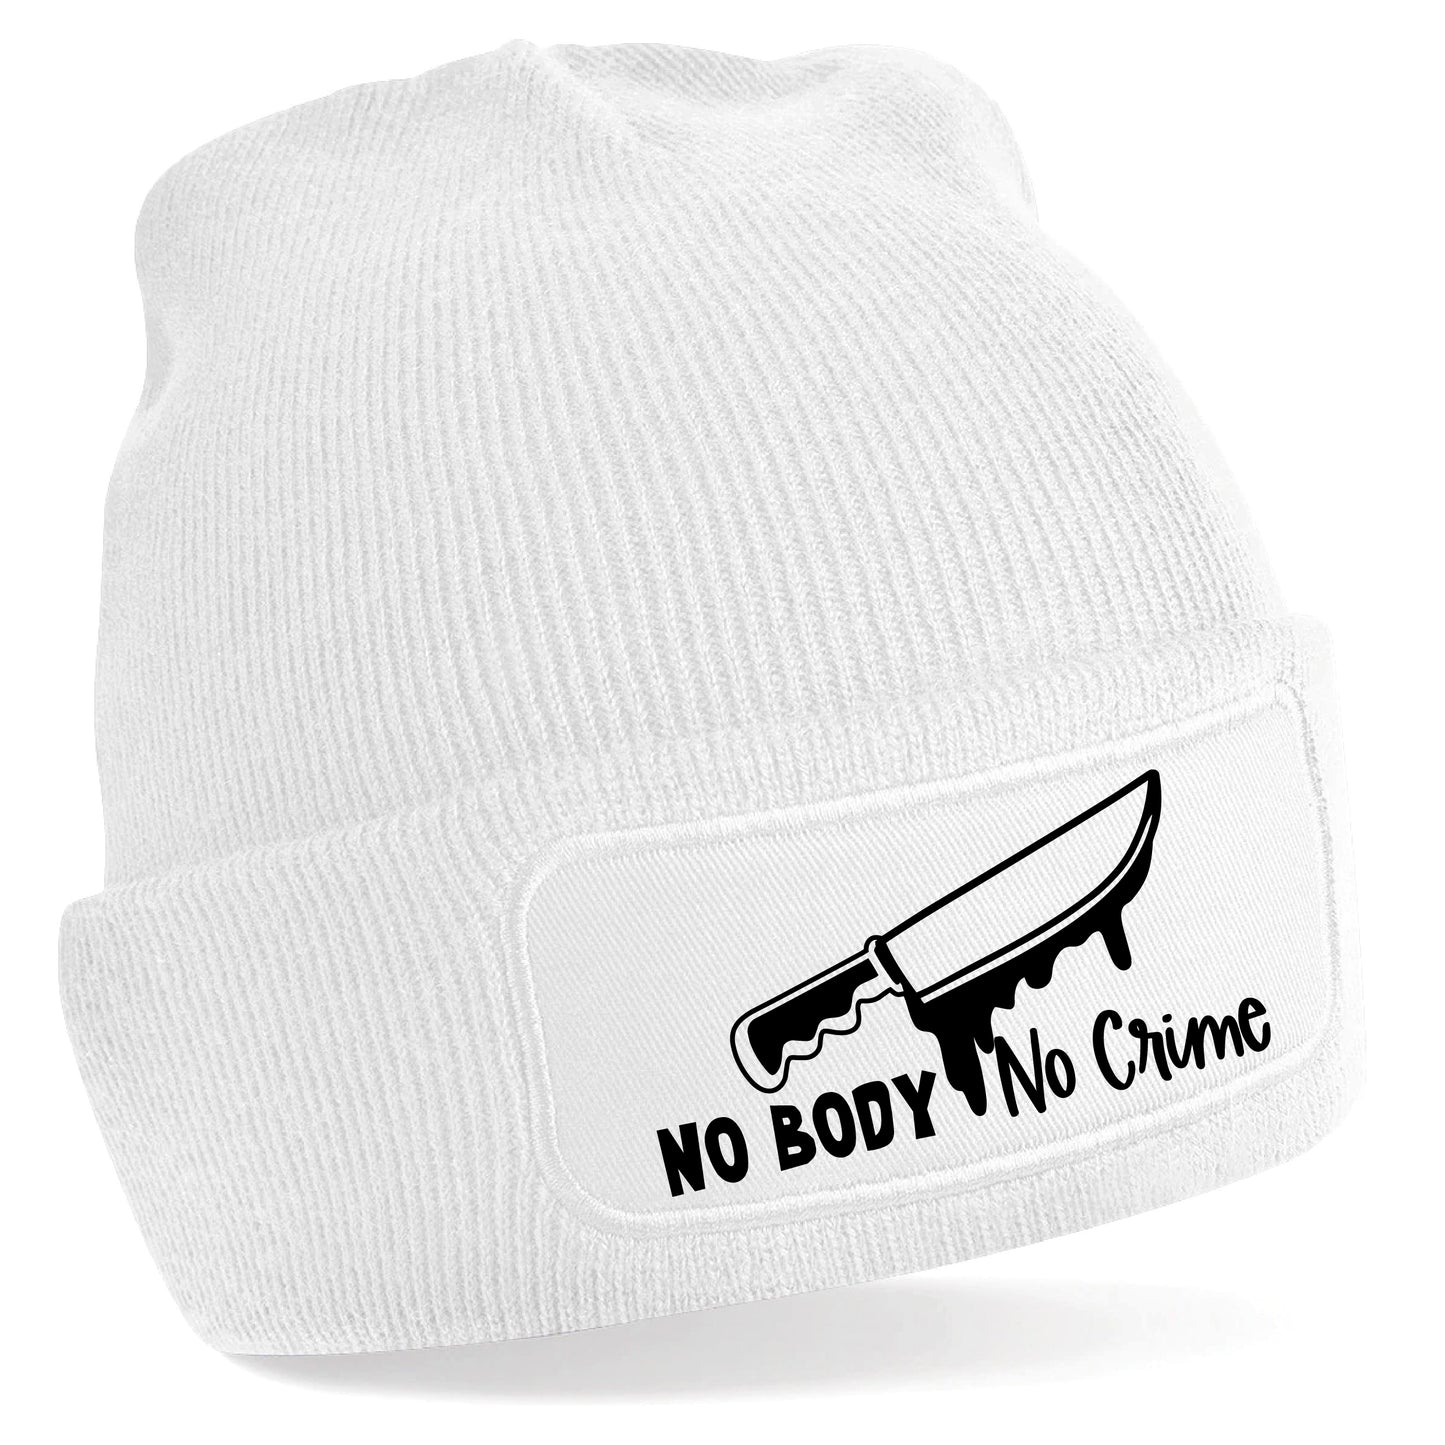 No Body No Crime Beanie Hat